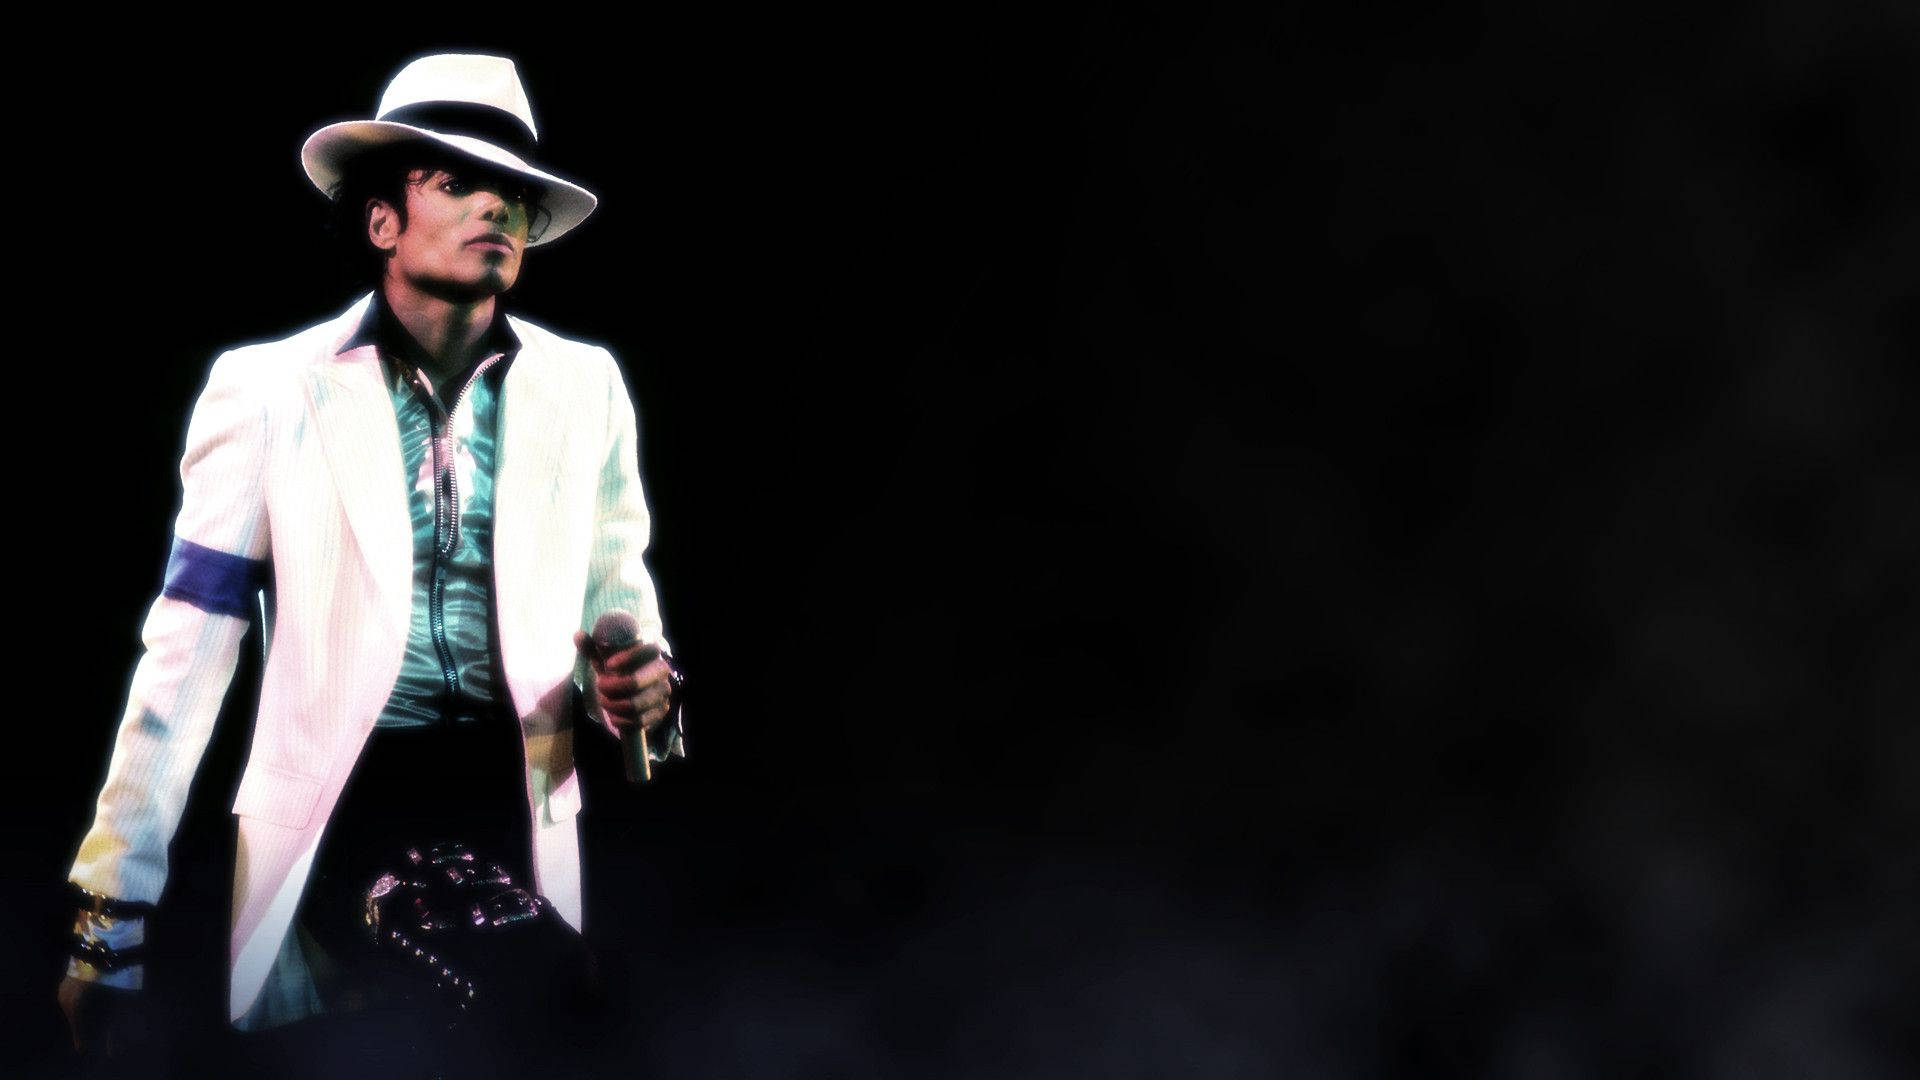 Michael Jackson In White Suit